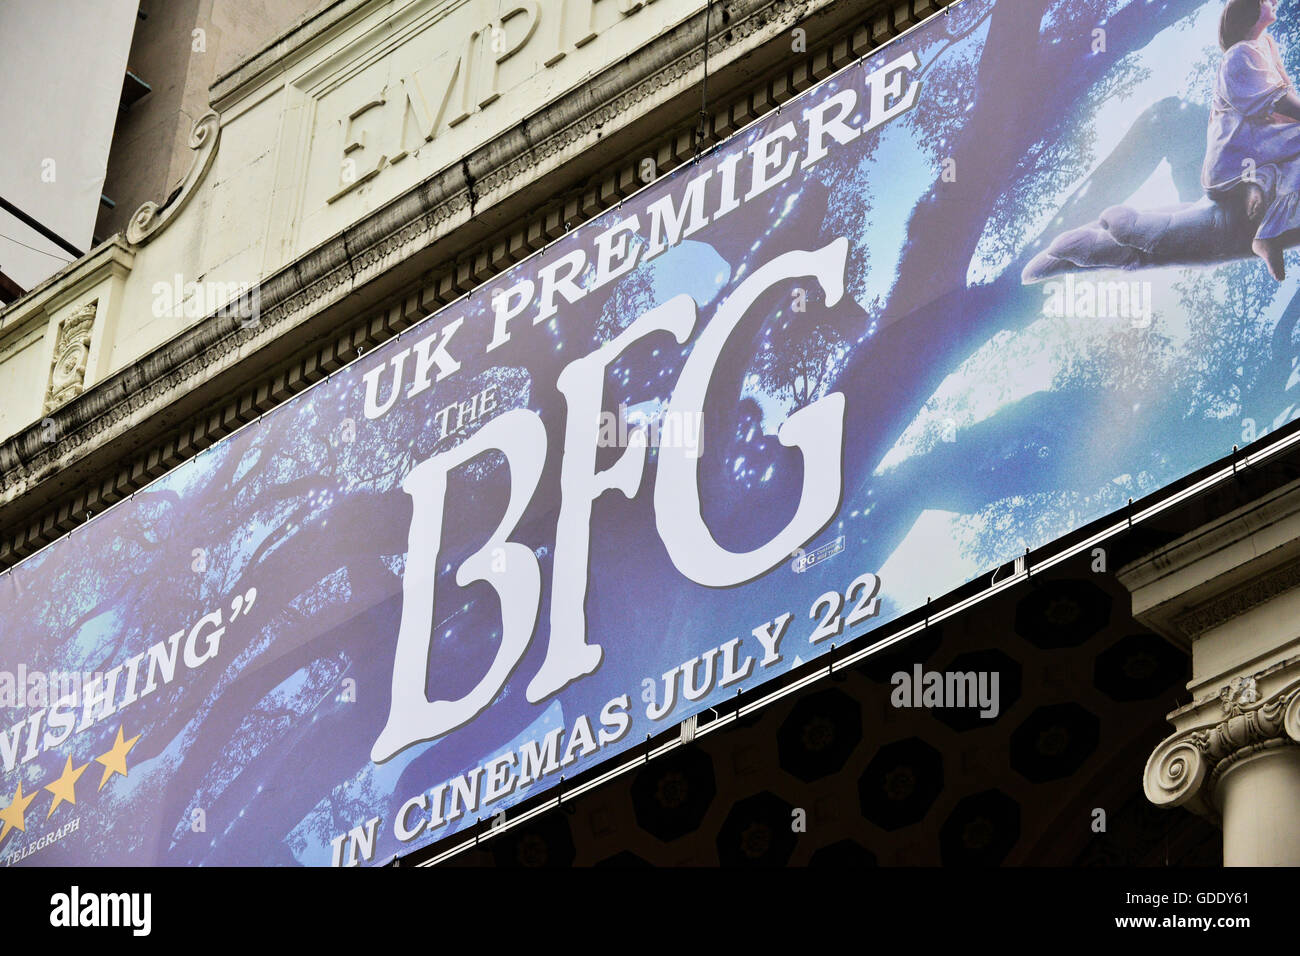 Leicester Square, London, UK. 15. Juli 2016. BFG große freundliche Riese Film Premiere Vorbereitungen am Leicester Square. Stockfoto